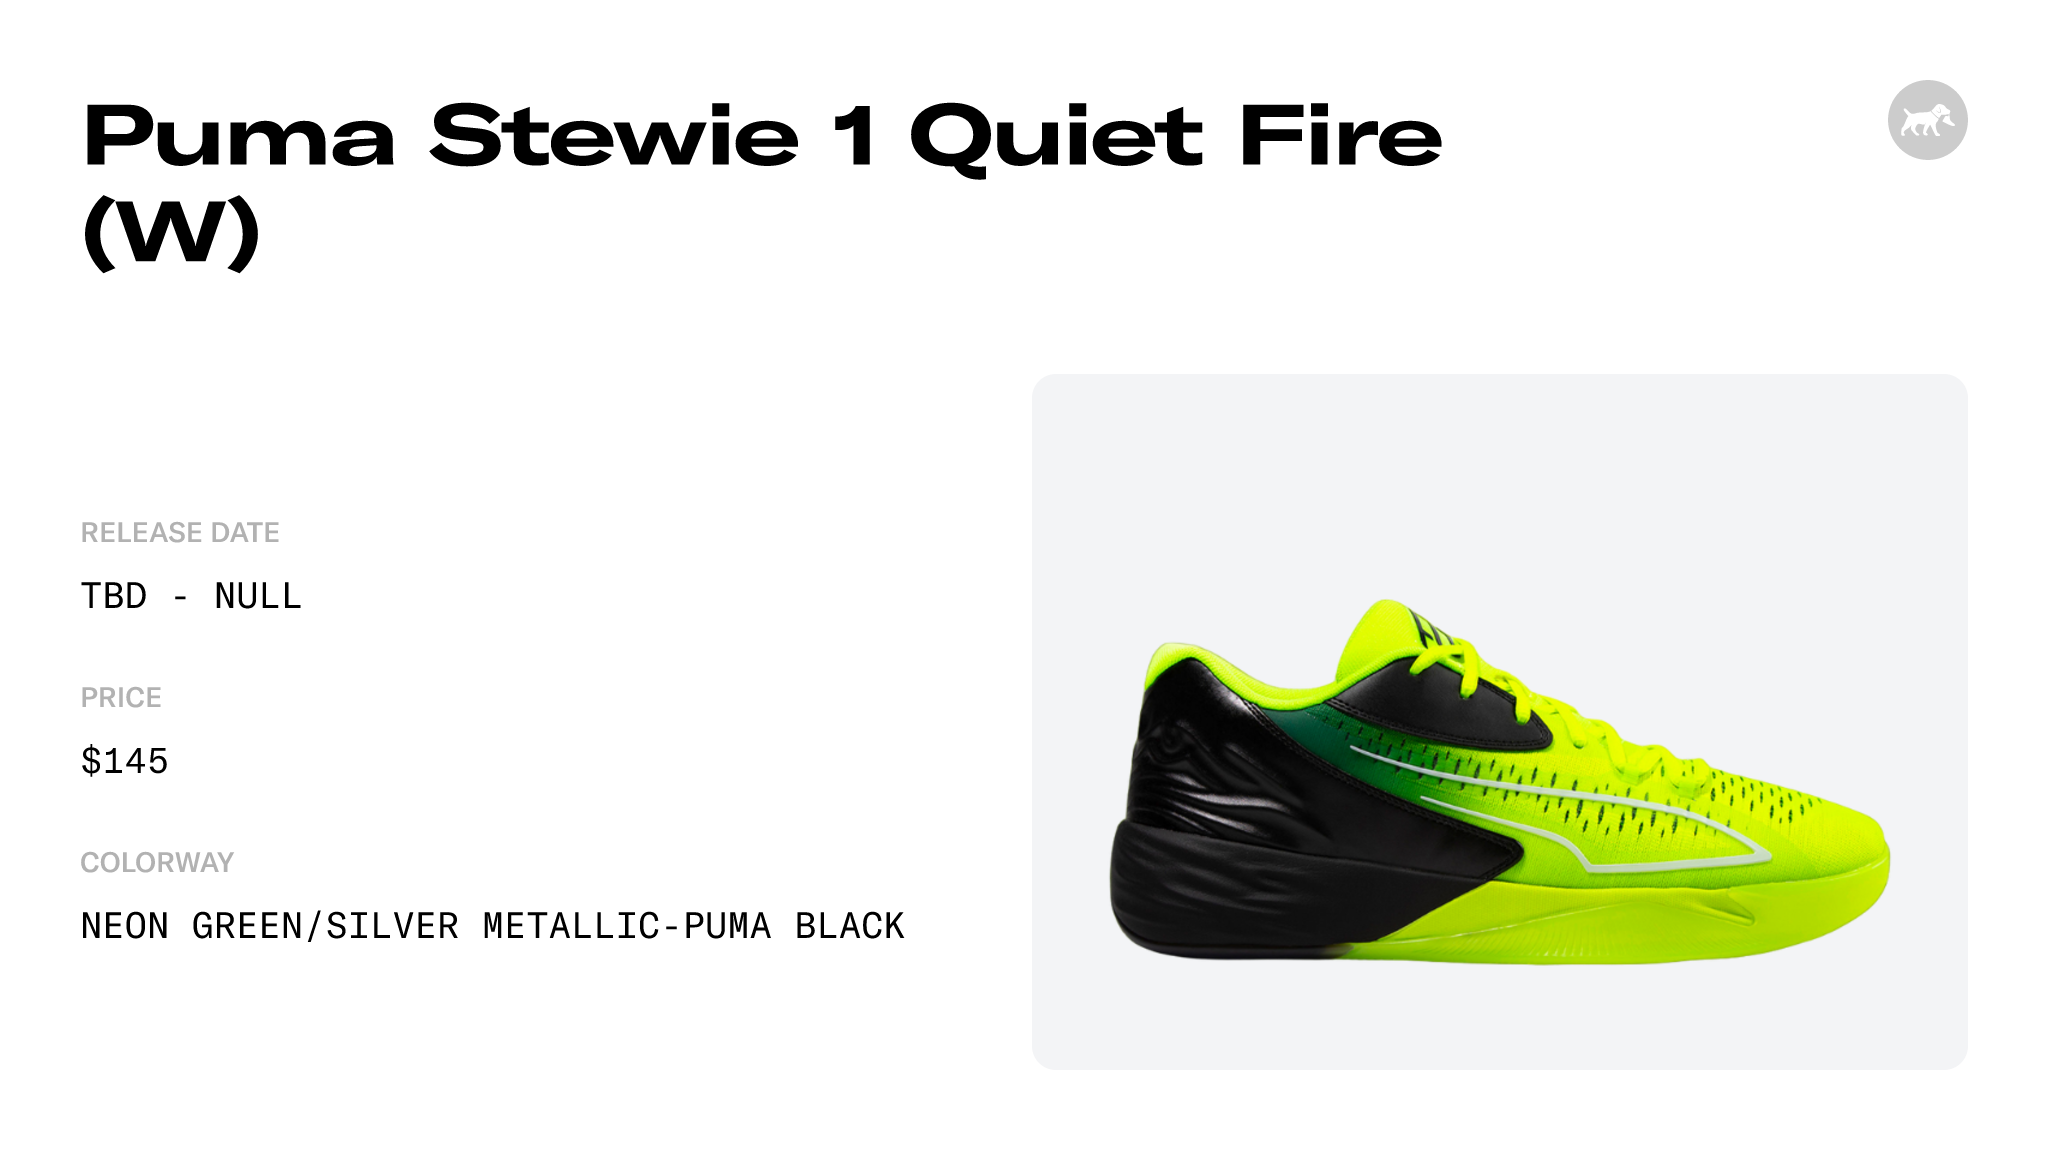 Puma Stewie 1 Quiet Fire (W) Raffles and Release Date